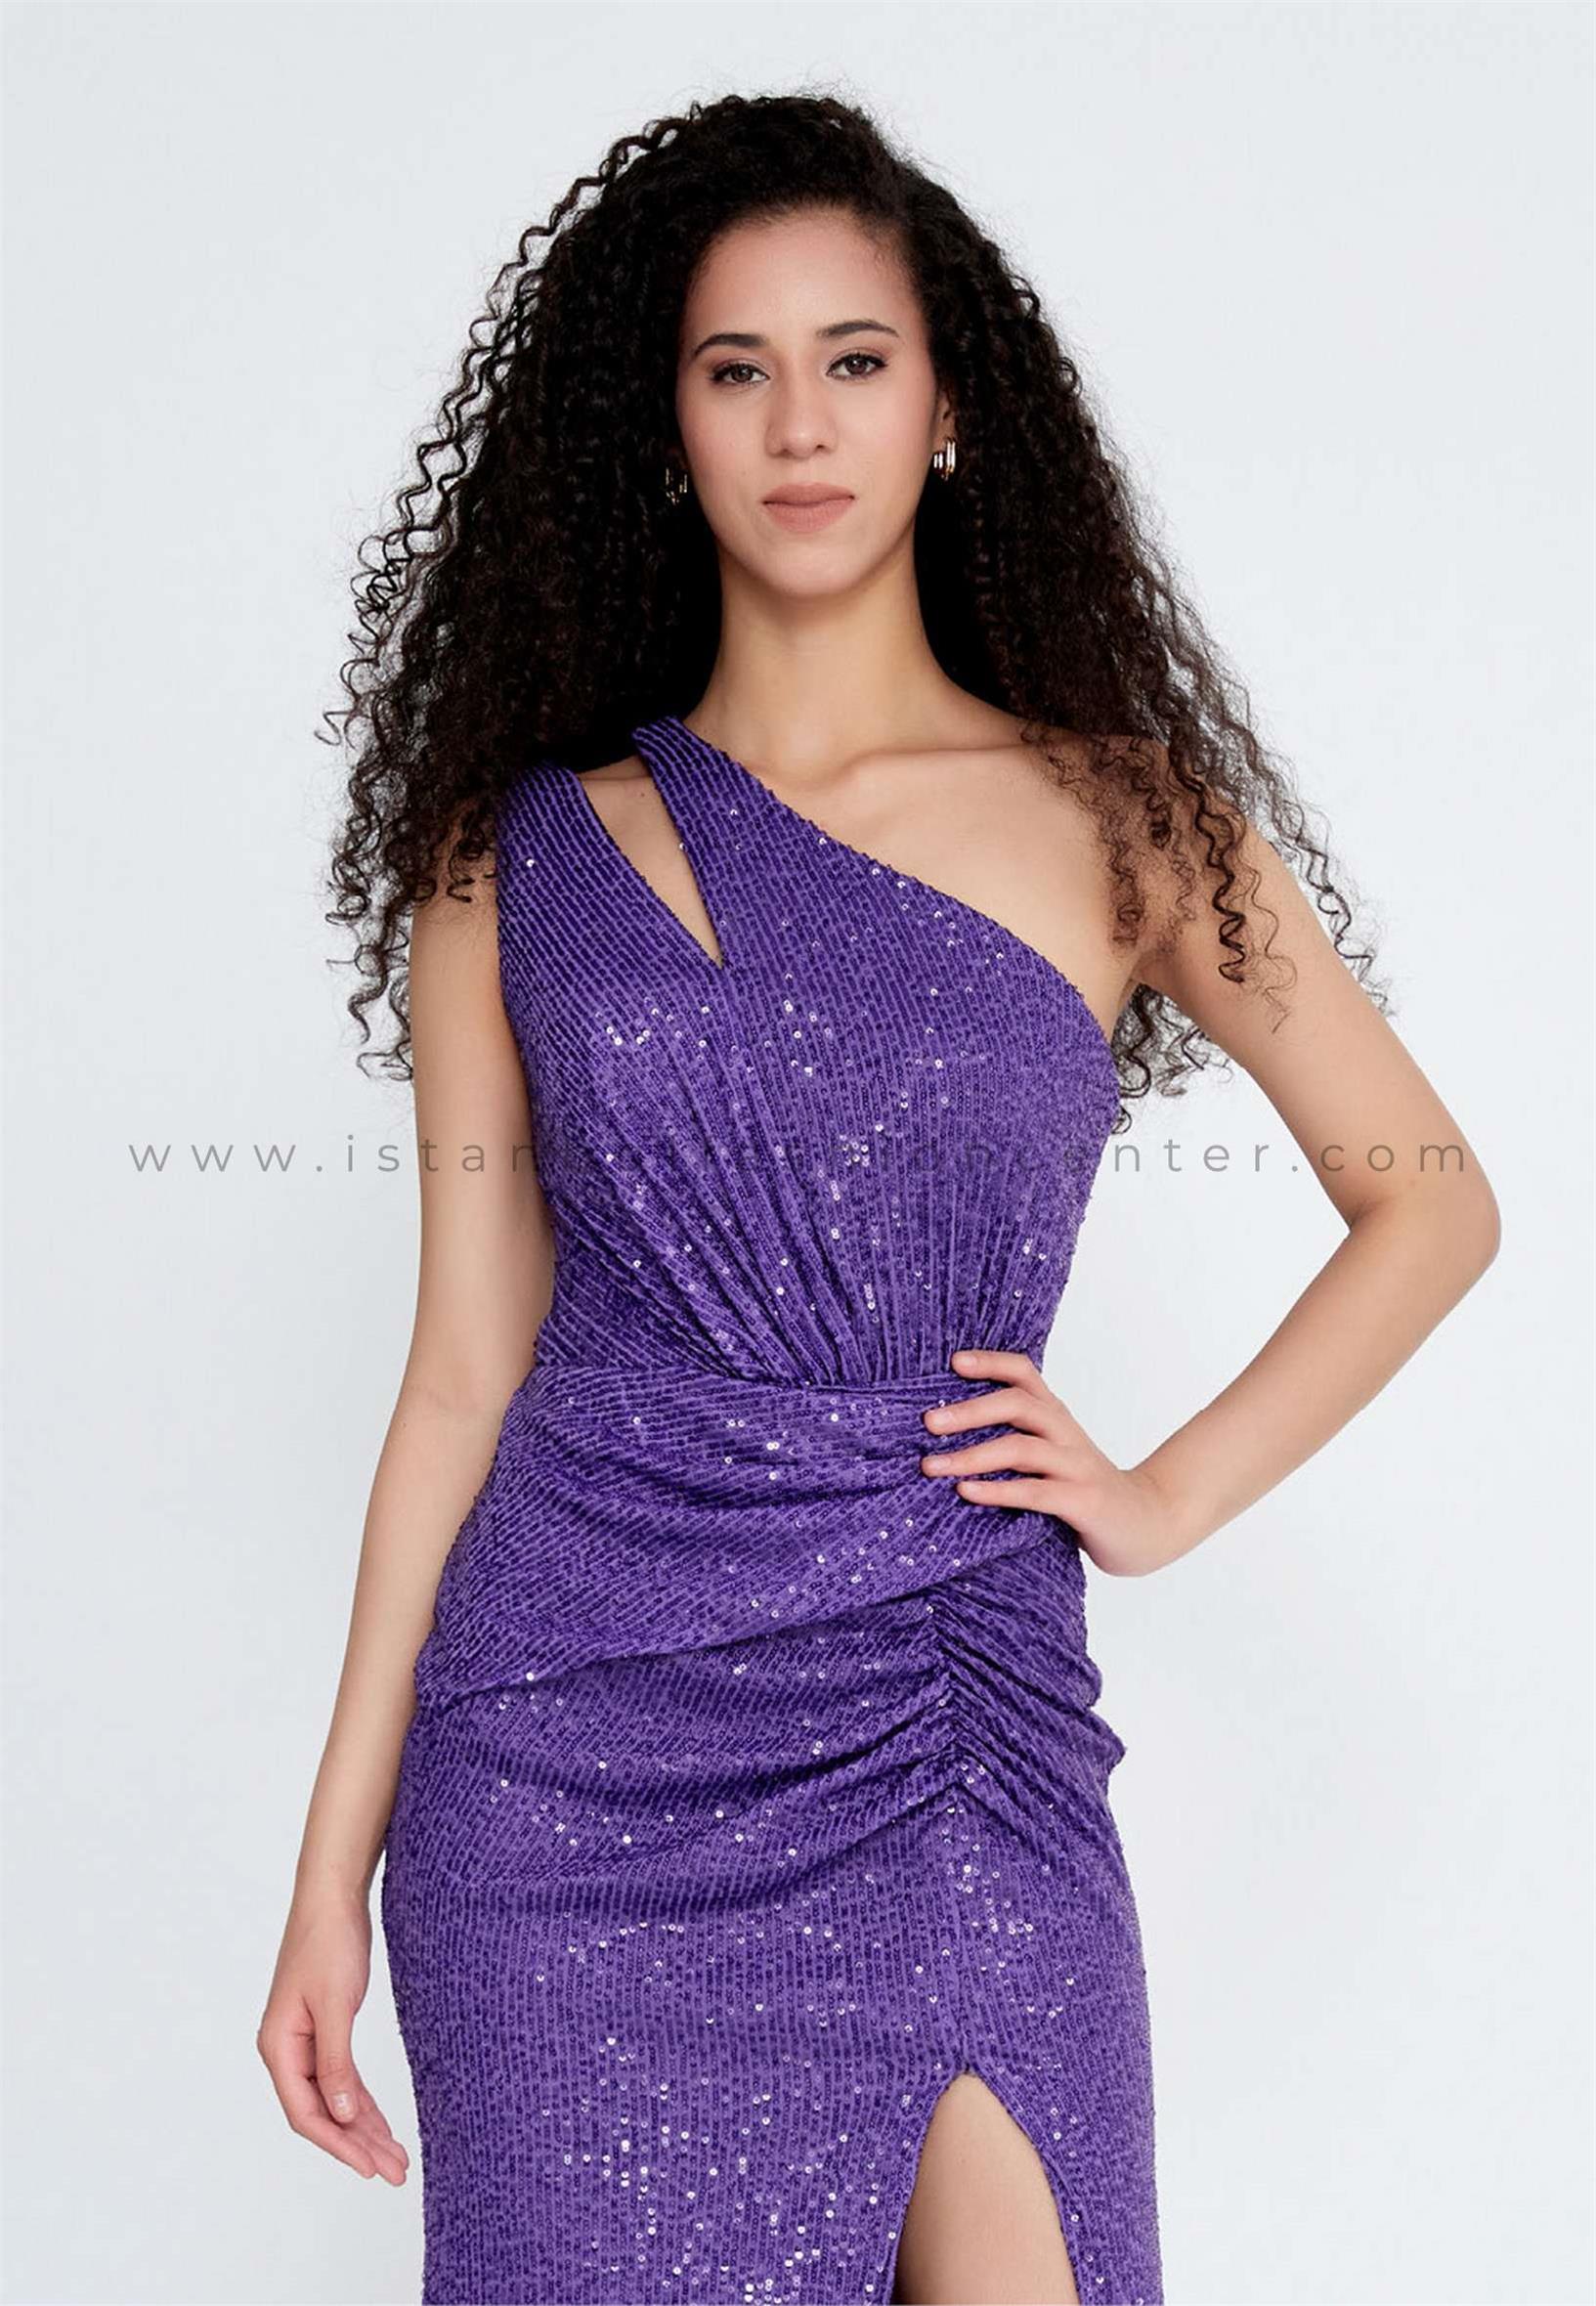 Purple Dress - One-Shoulder Maxi Dress - Purple Sleeveless Dress